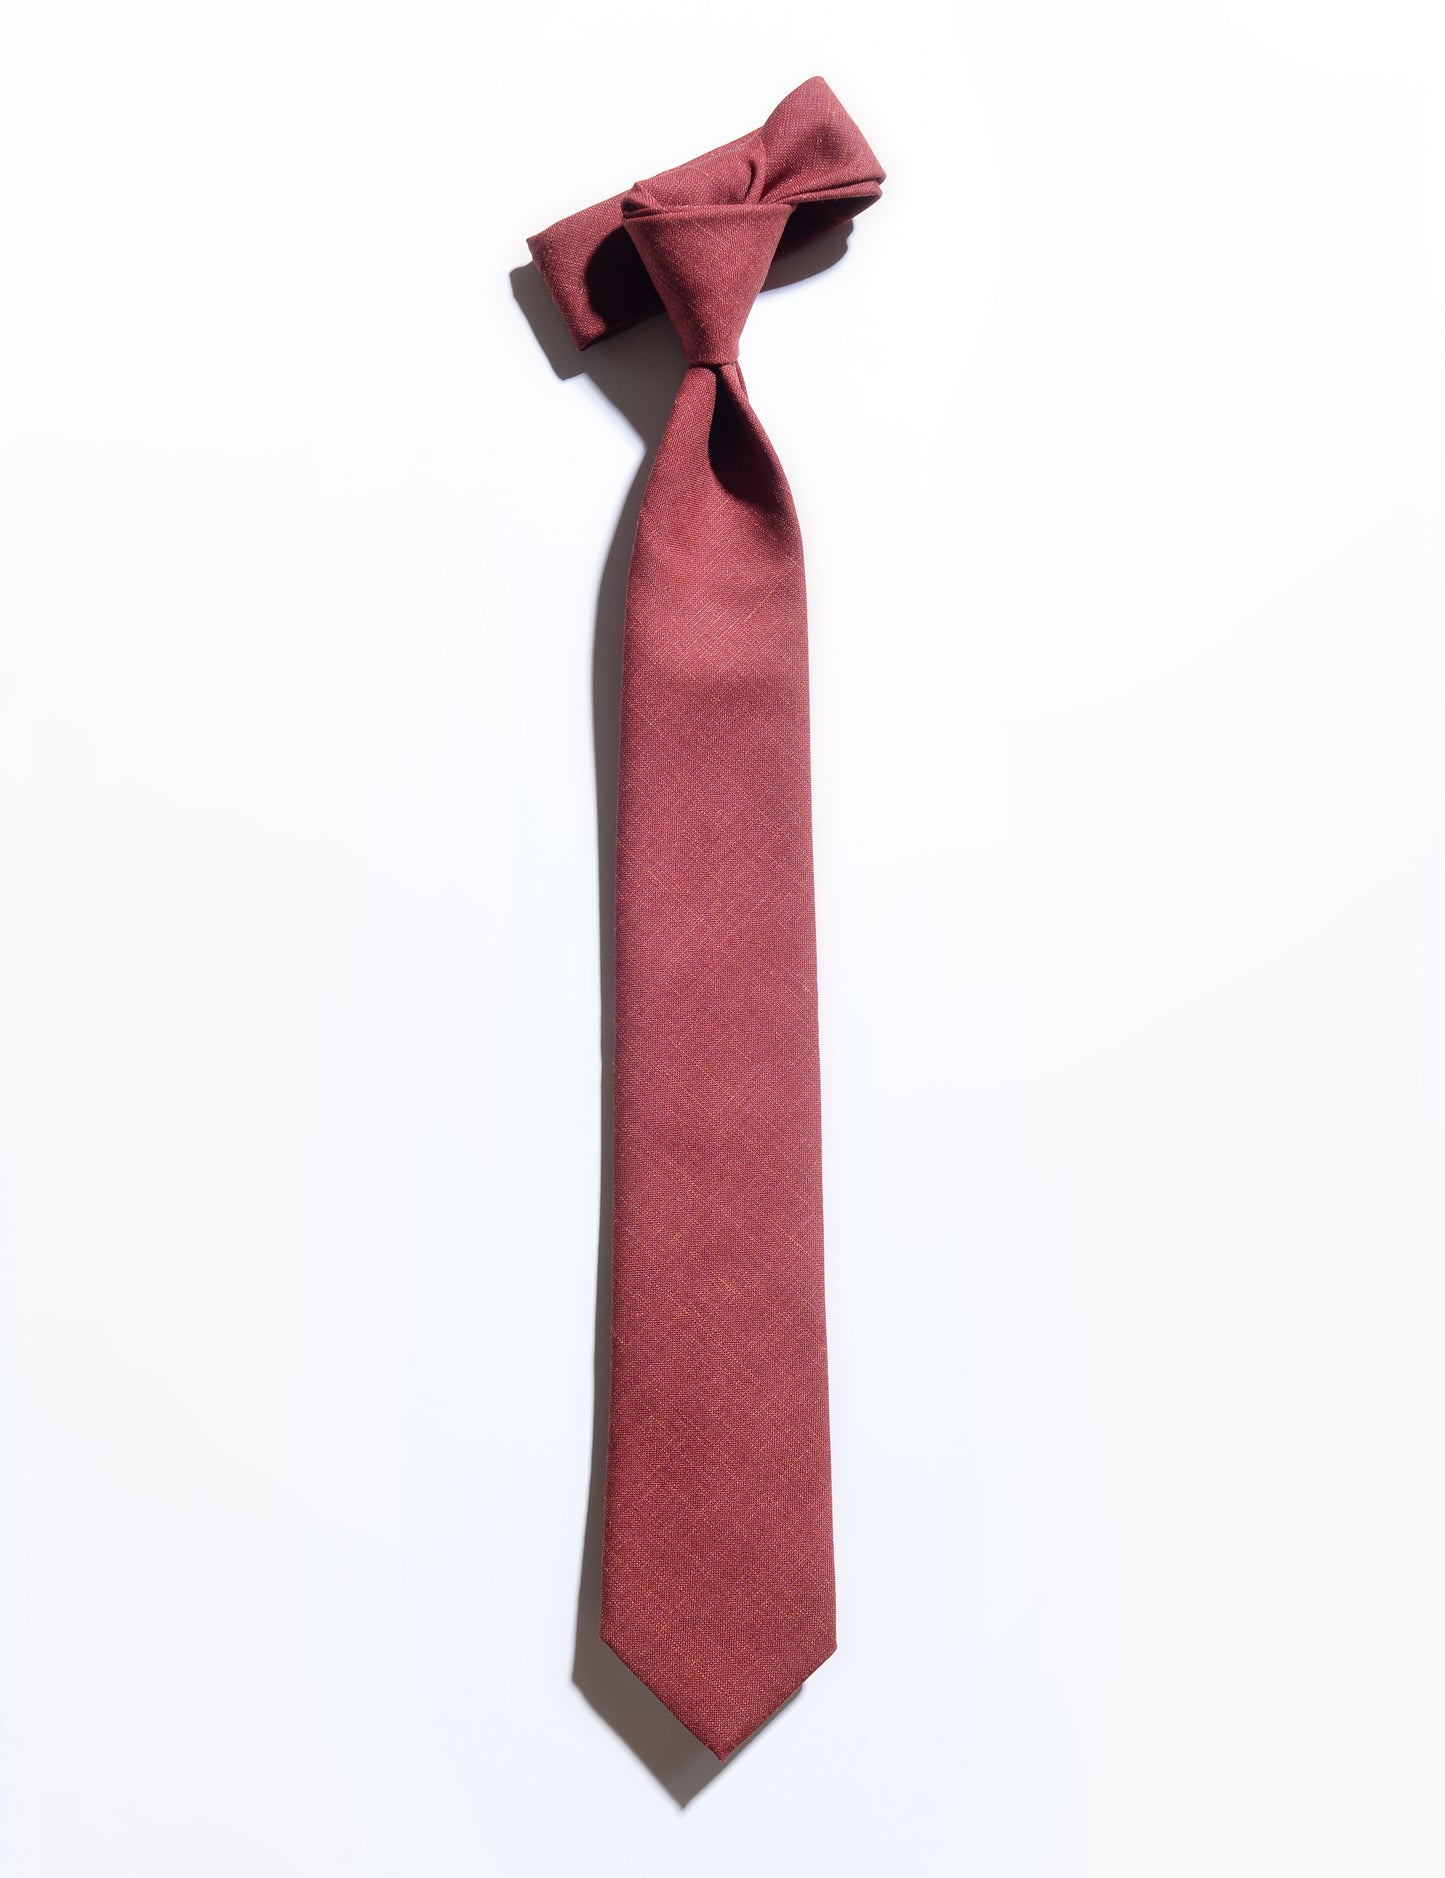 Wool Silk/Linen Tropical Tie in Sienna Red